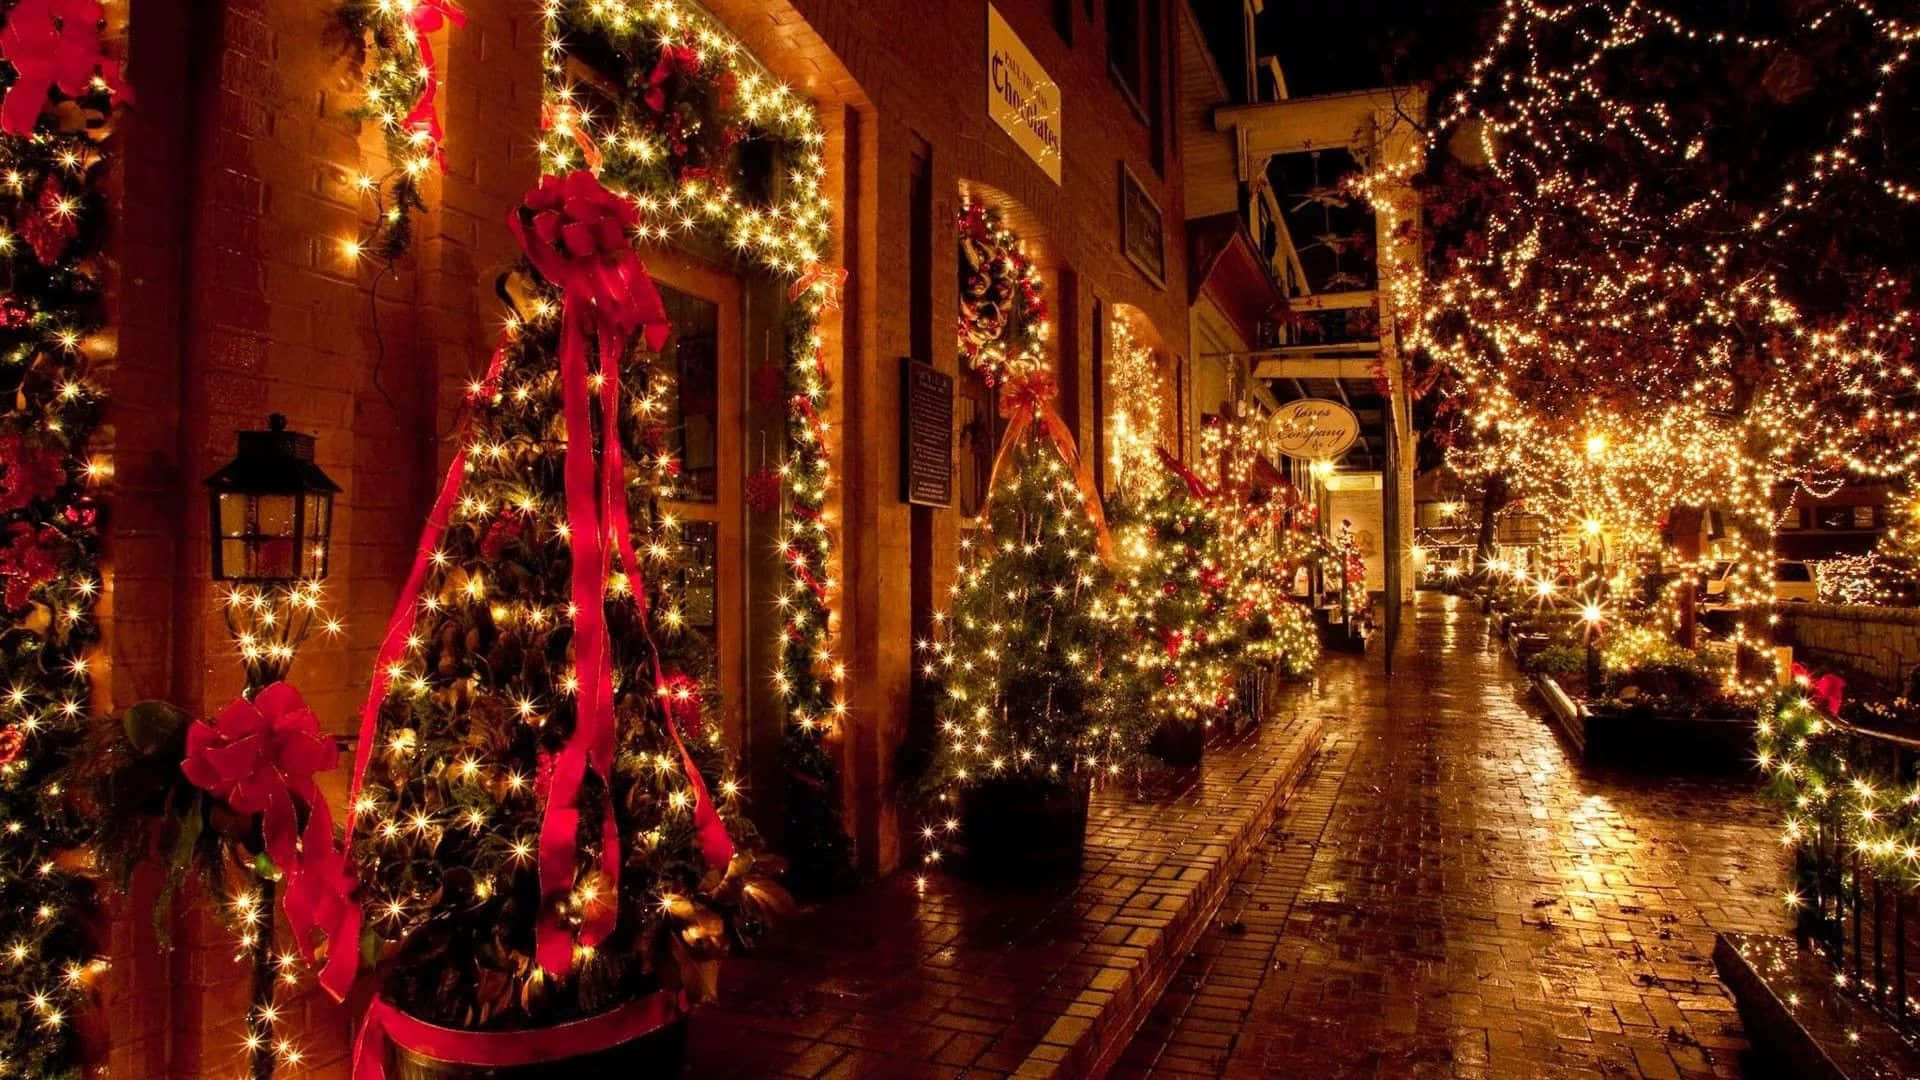 Christmas Light On Christmas Trees On Sidewalk Picture